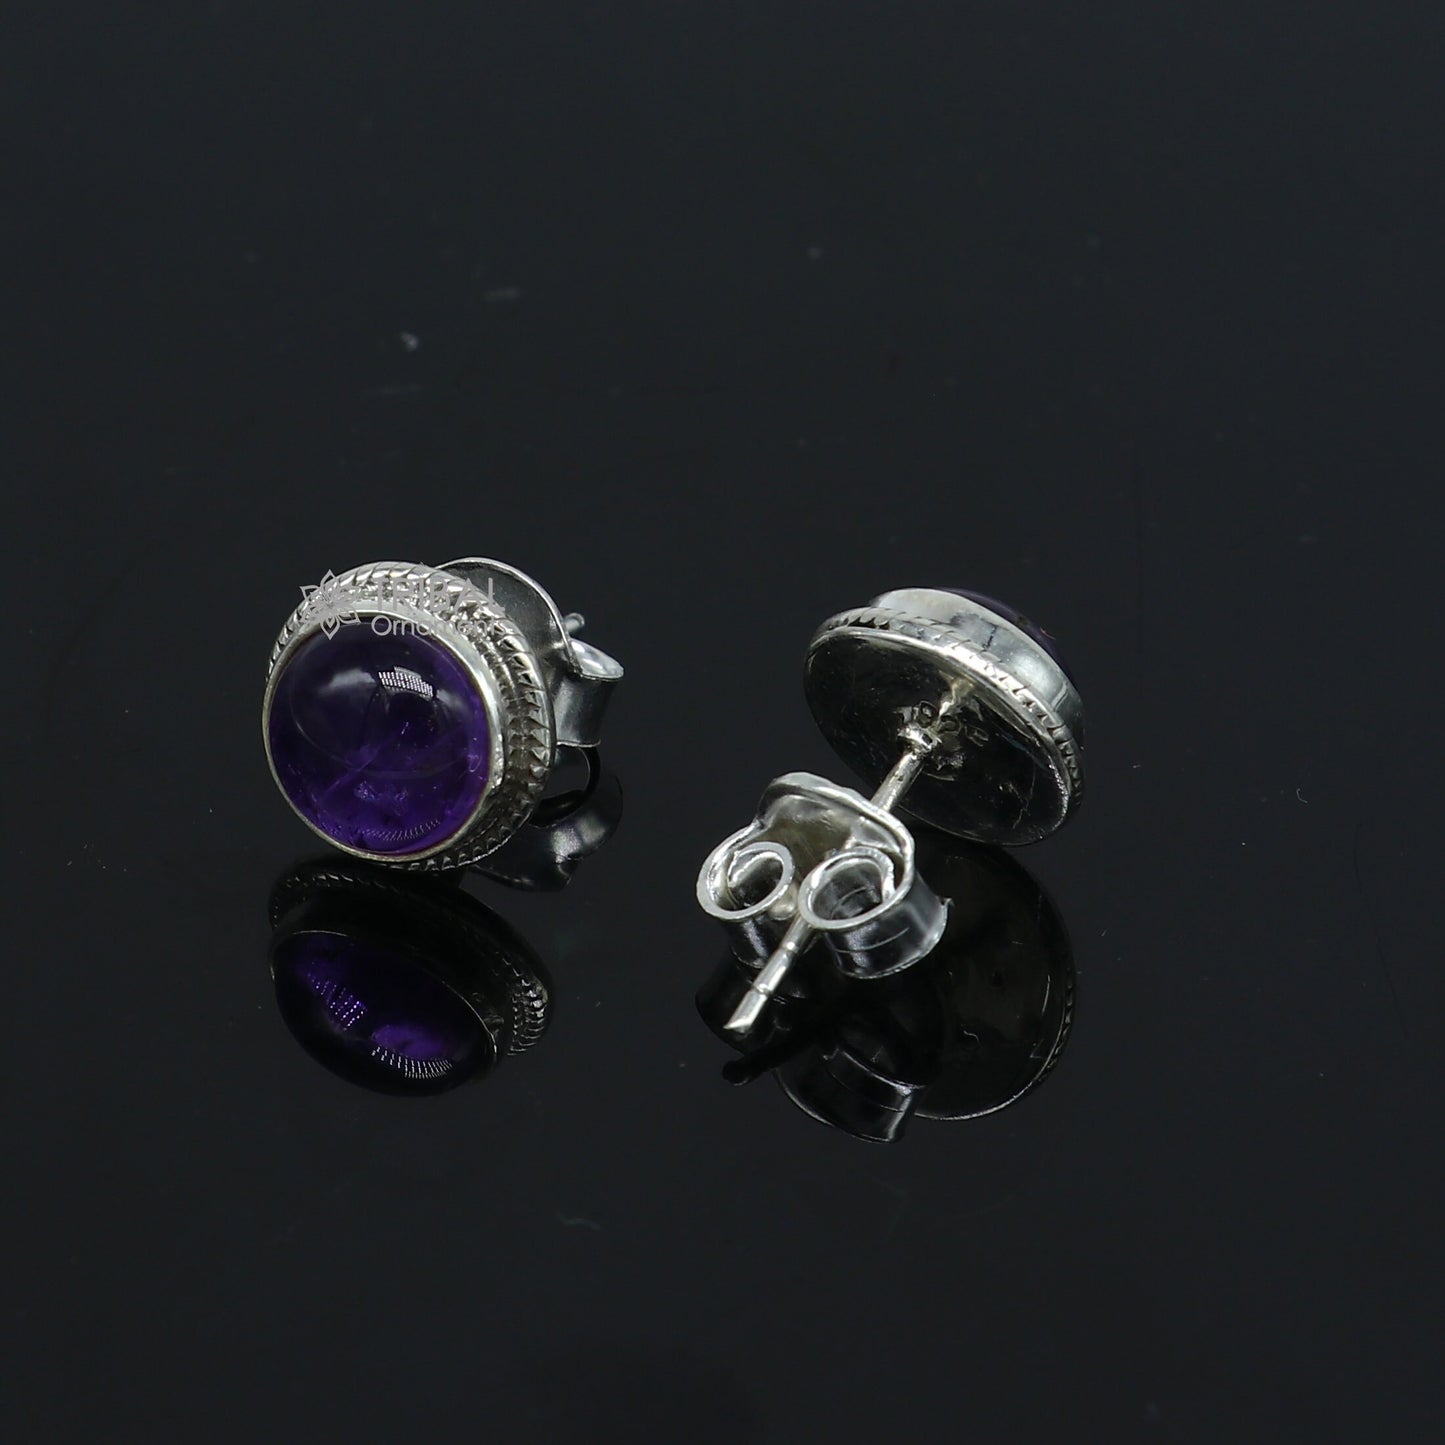 11MM round 925 sterling silver fabulous amethyst stone stud earrings, best unisex jewelry fancy earrings daily use jewelry collection s1220 - TRIBAL ORNAMENTS